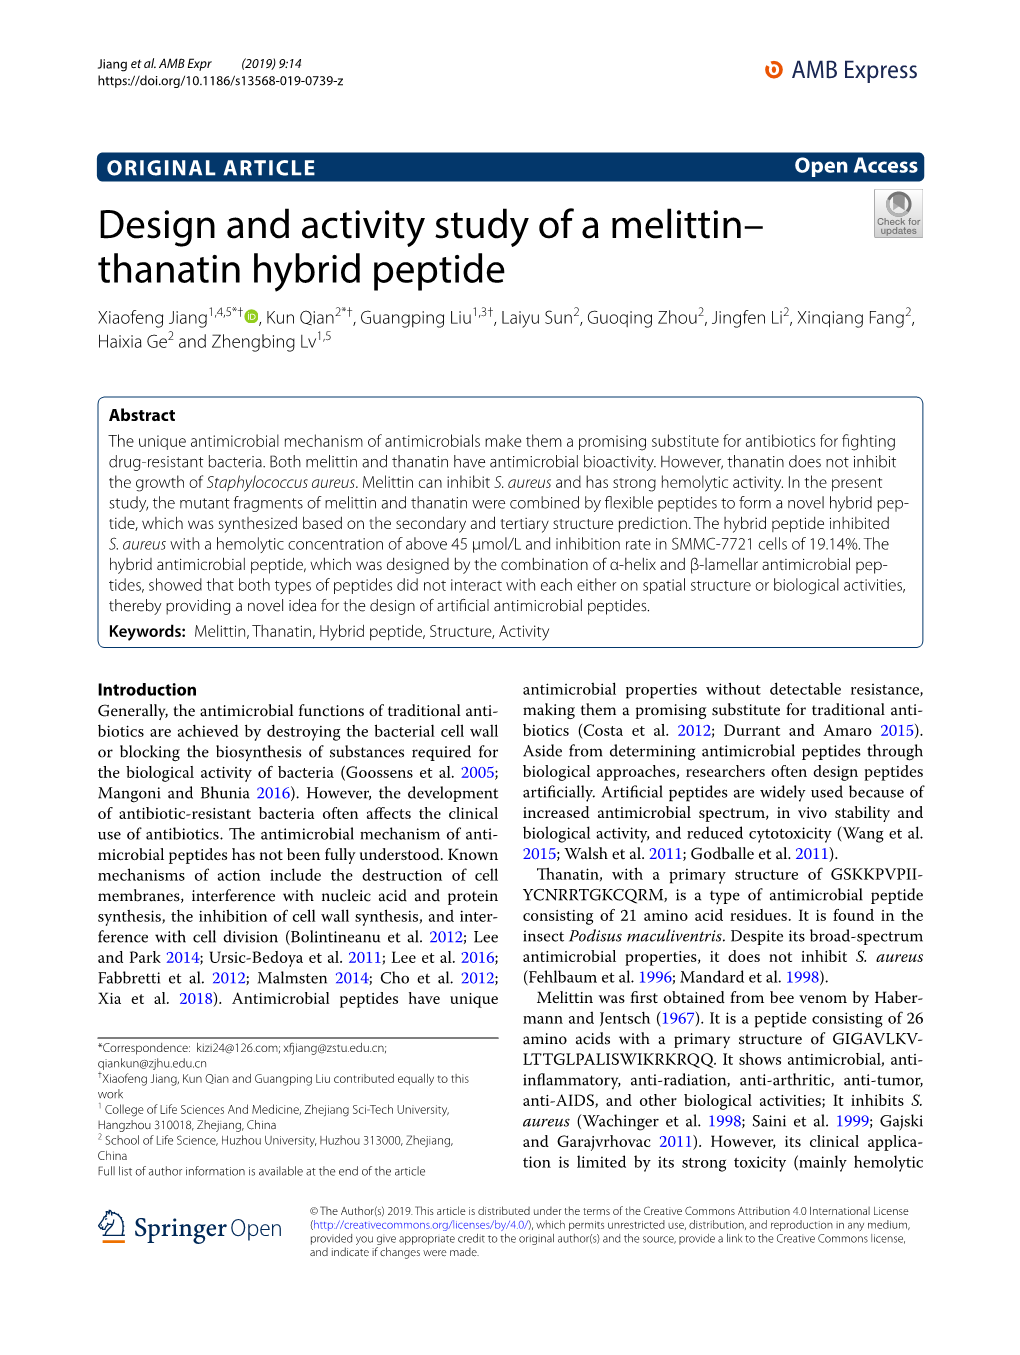 Design and Activity Study of a Melittin–Thanatin Hybrid Peptide